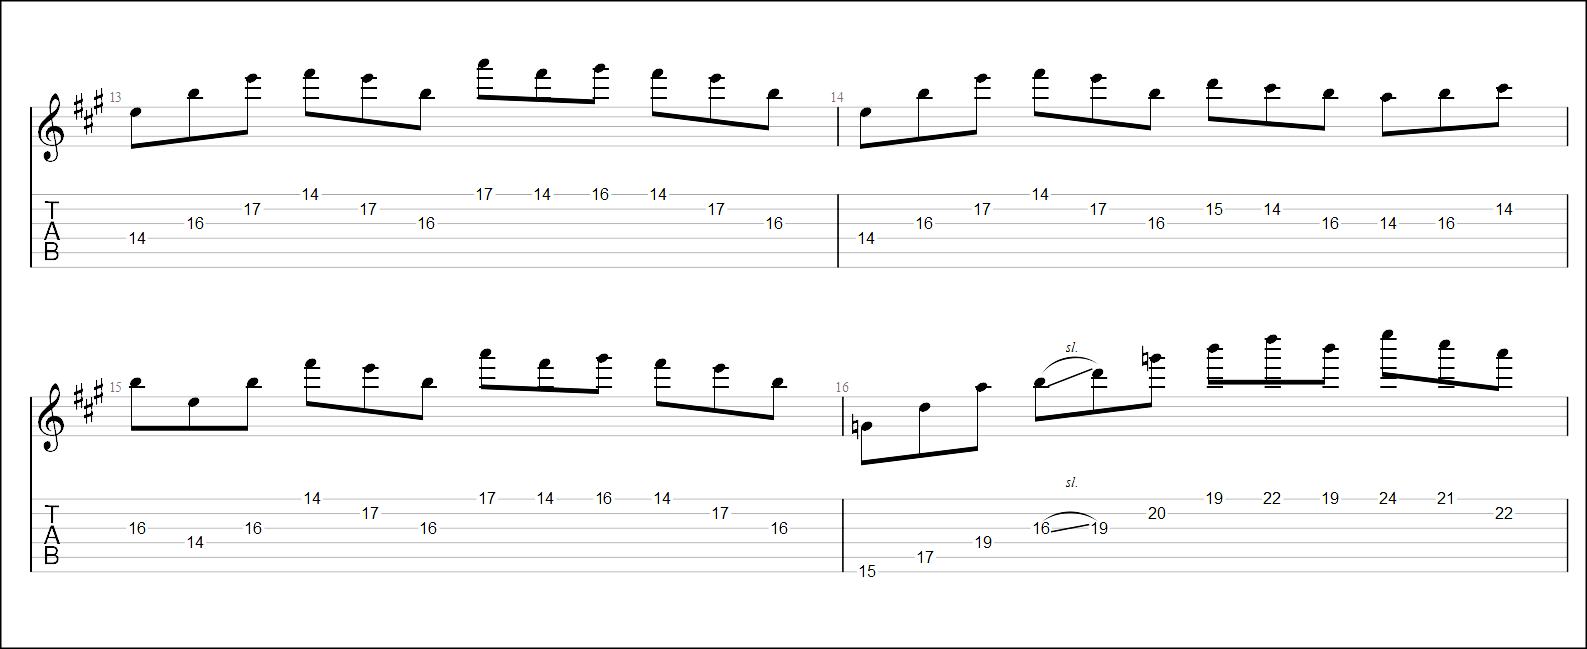 【Part TAB】Glasgow Kiss / John Petrucci Guitar Intro Practice ジョンペトルーシ グラスゴウキス イントロ ギターピッキング練習 【Guitar Picking Vol.52】